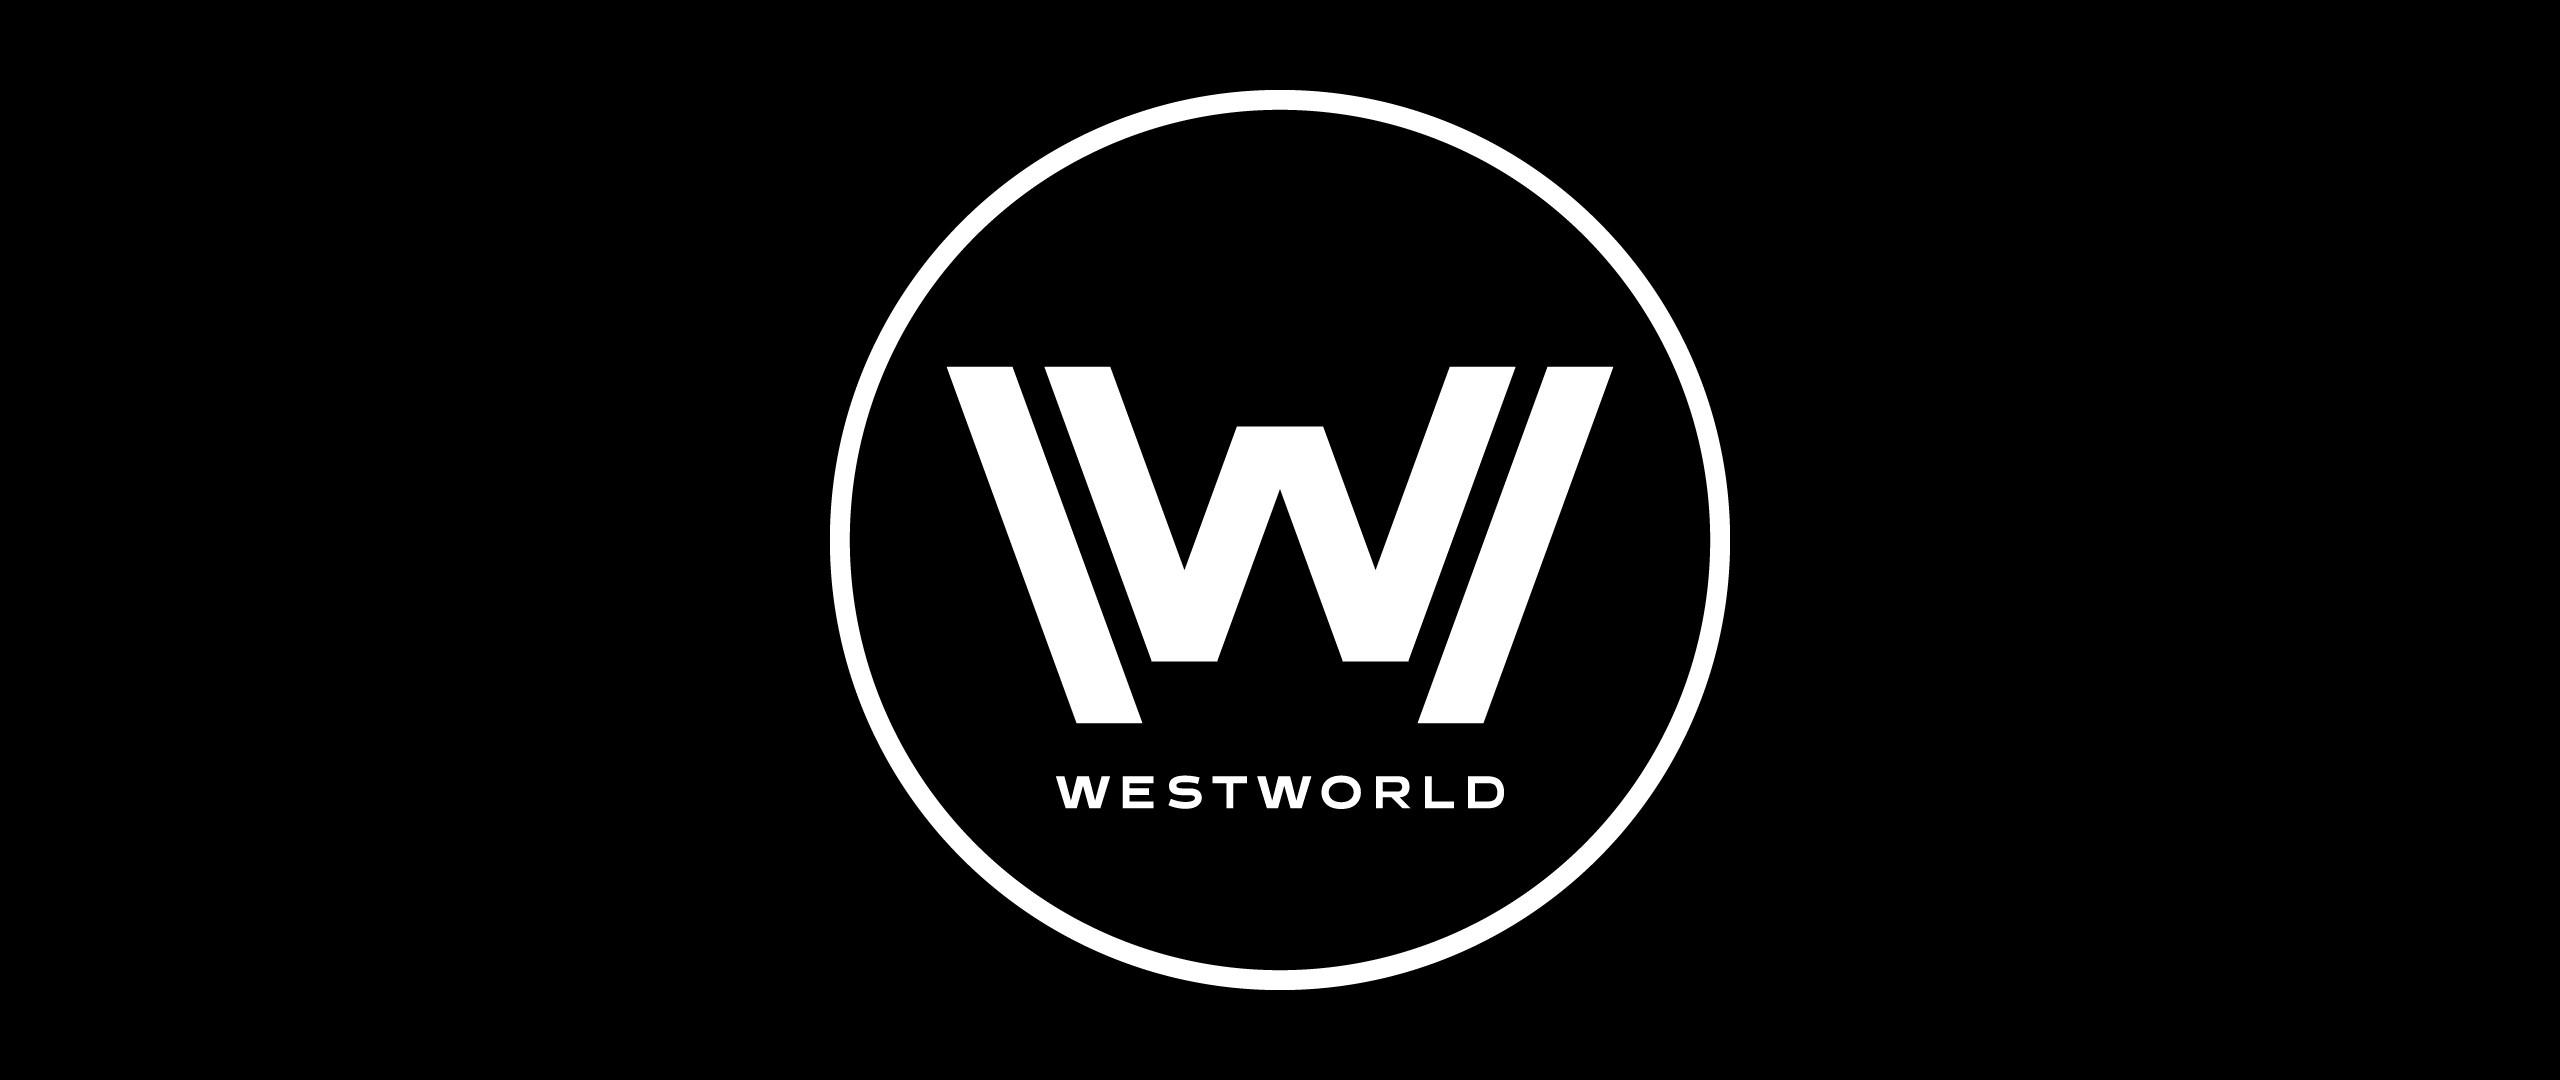 General 2560x1080 Westworld monochrome logo TV series simple background black background